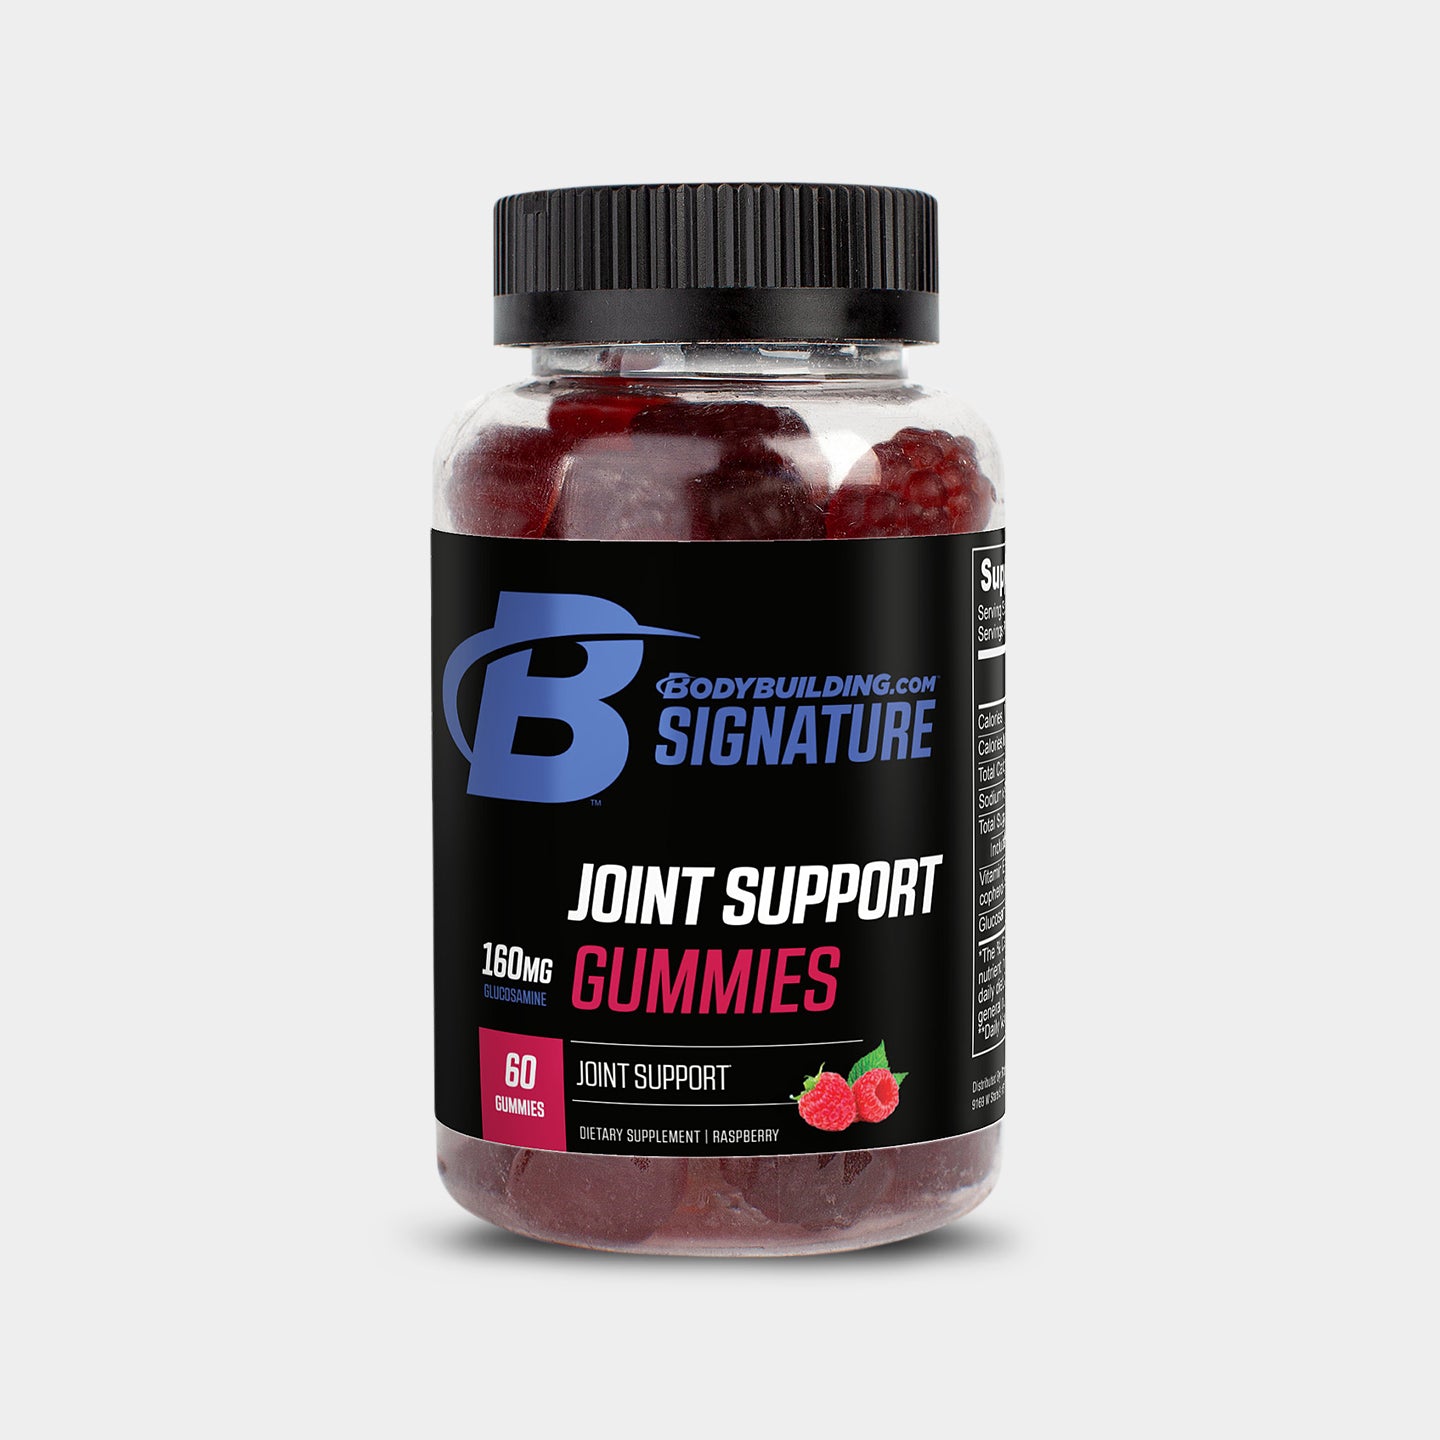 Bodybuilding.com Signature Joint Support Gummies A1